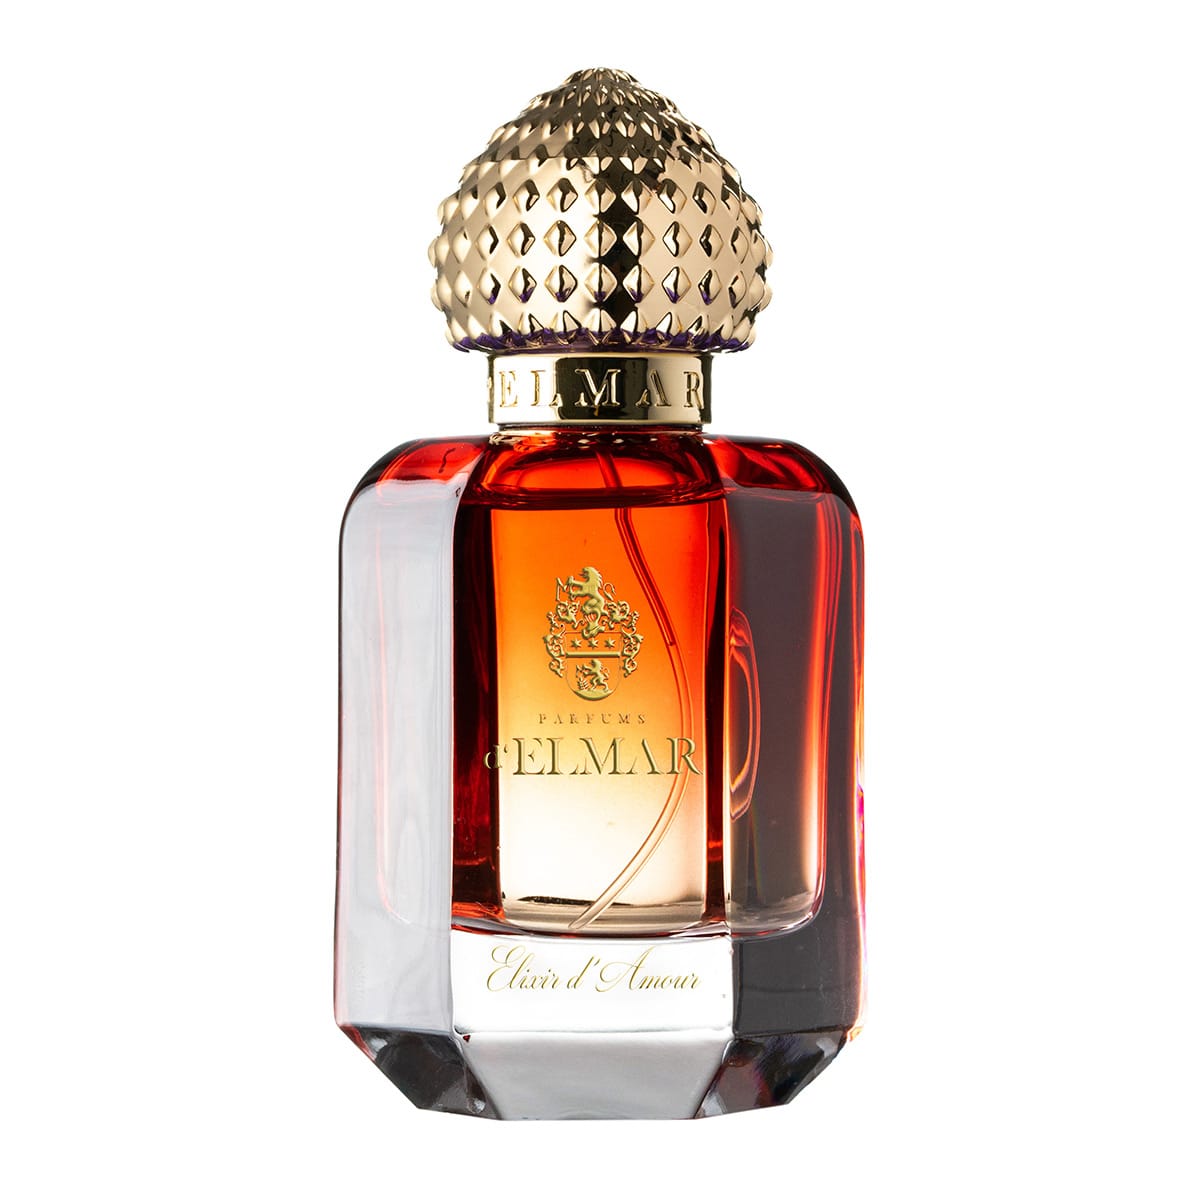 Elixir d'Amour - Parfums d'Elmar - EP 60ml